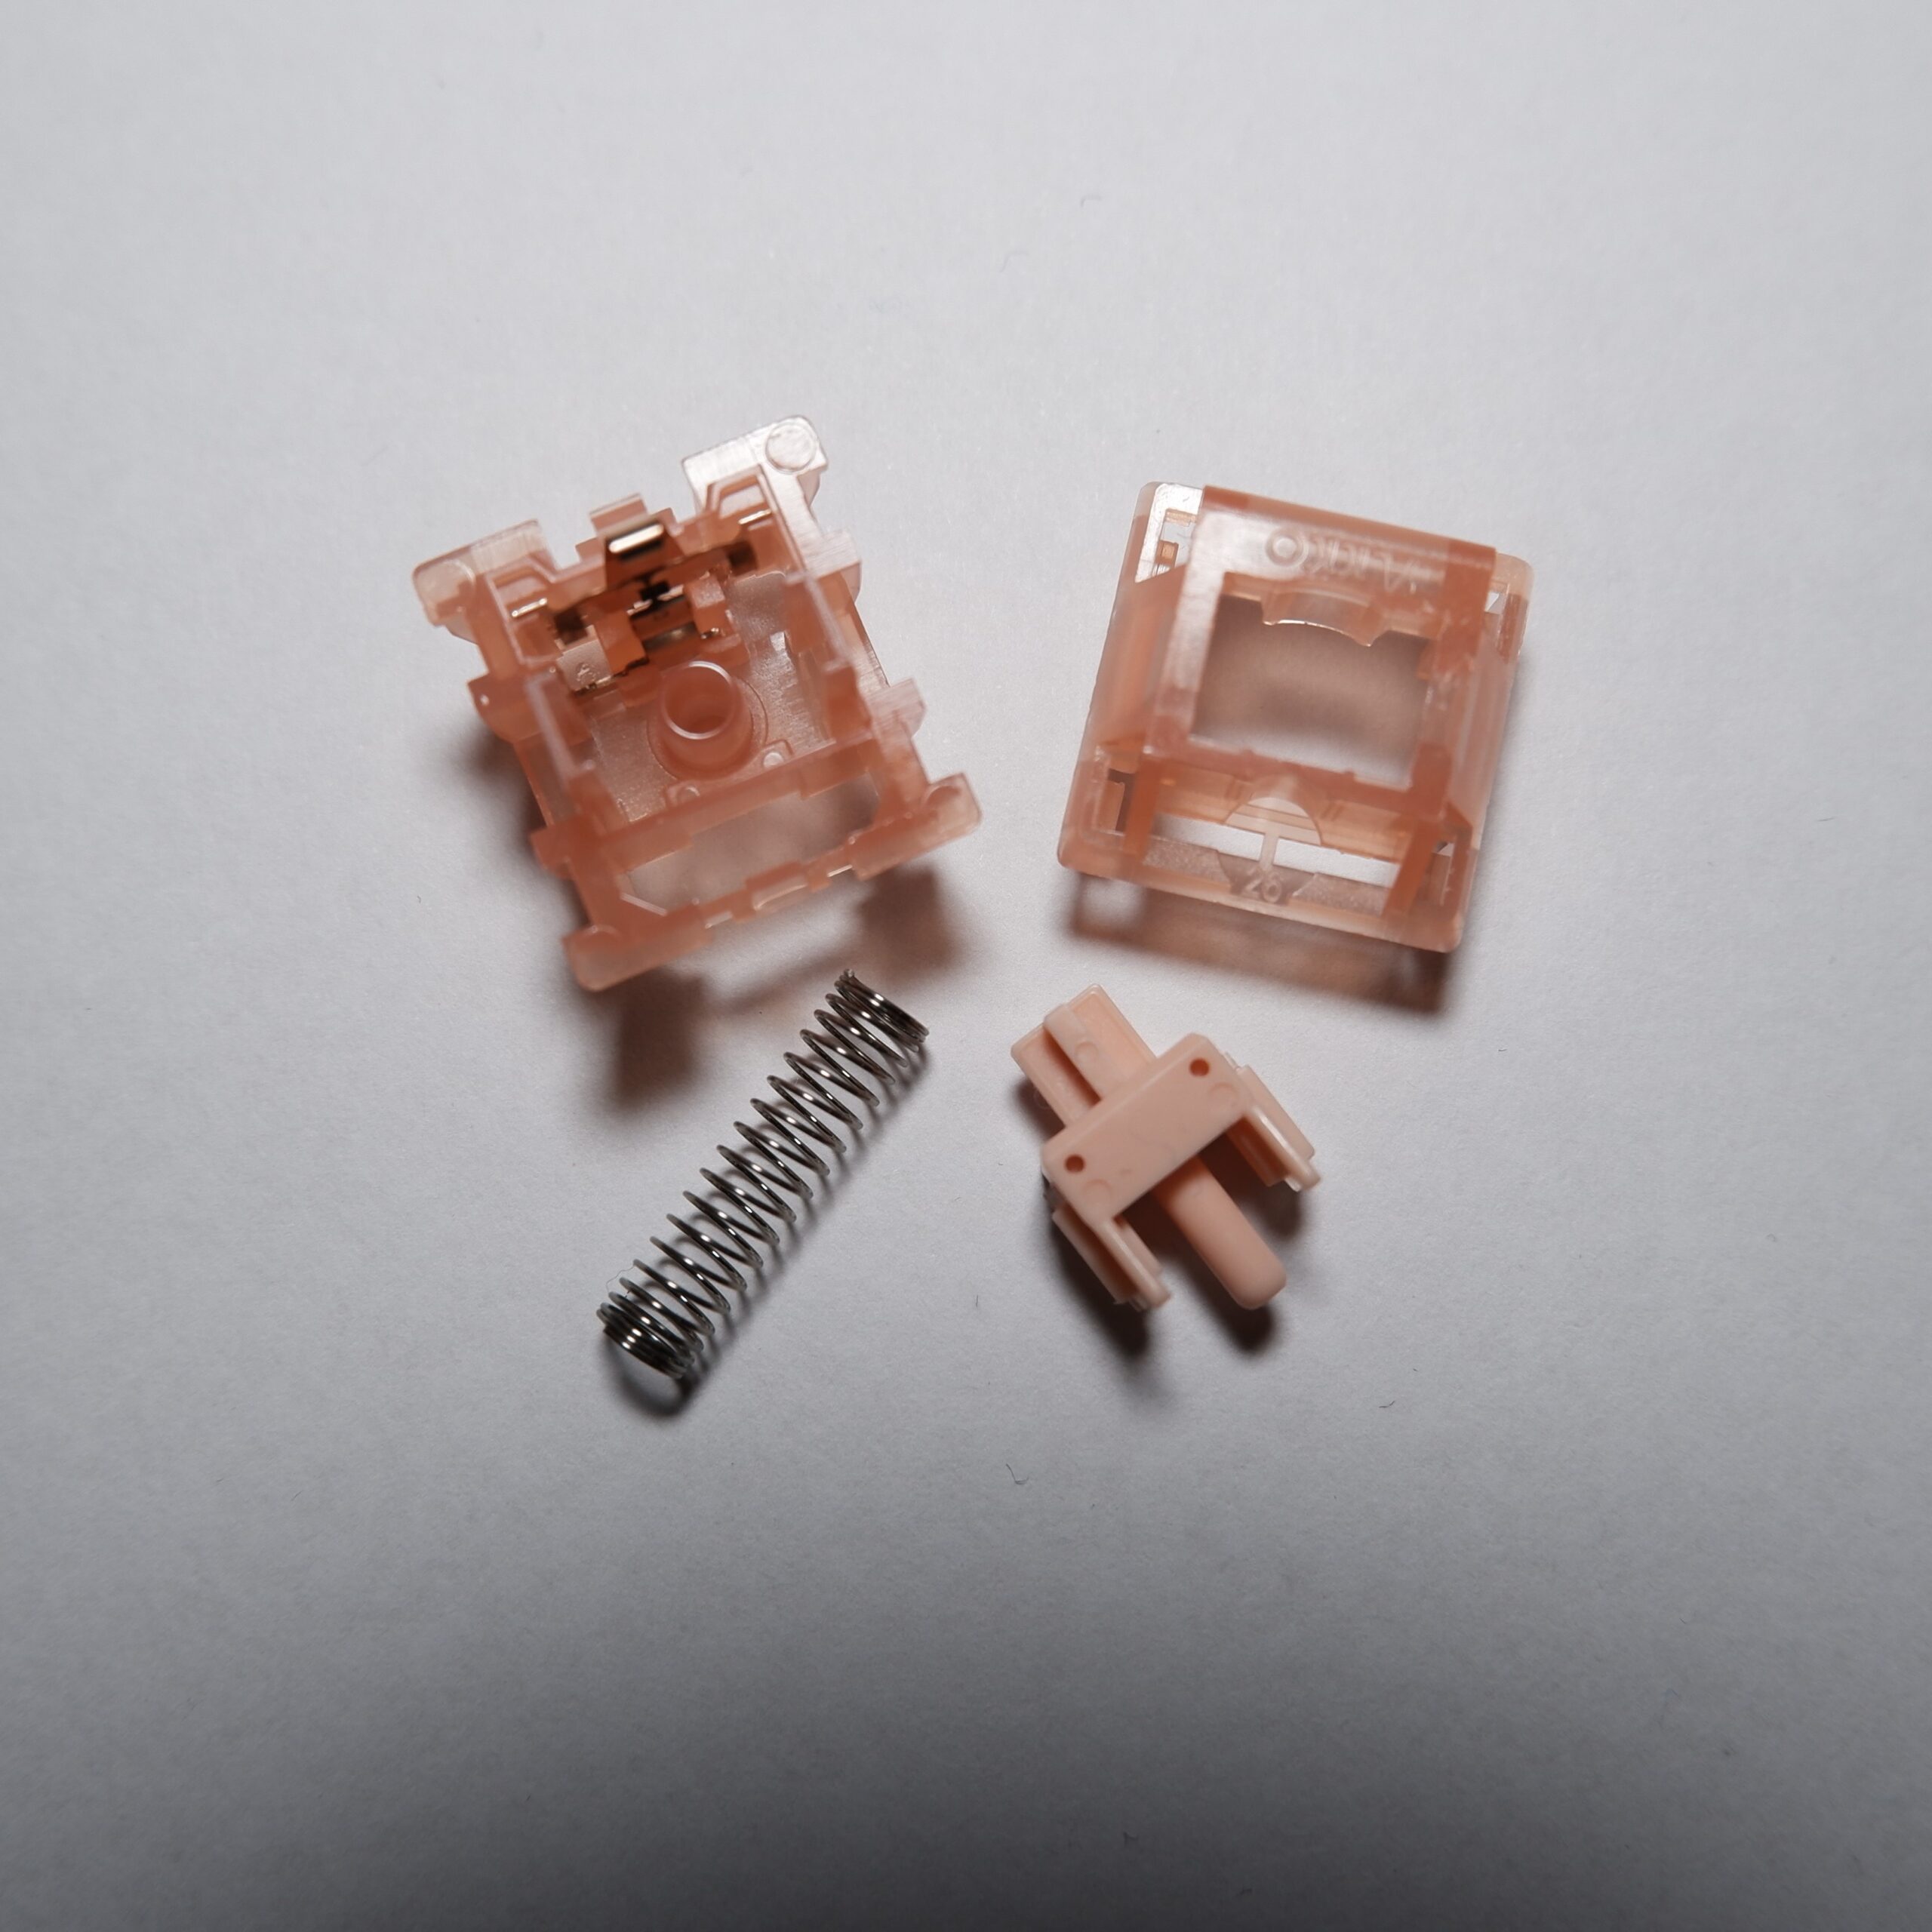 Akko Haze Pink Silent switch disassembled